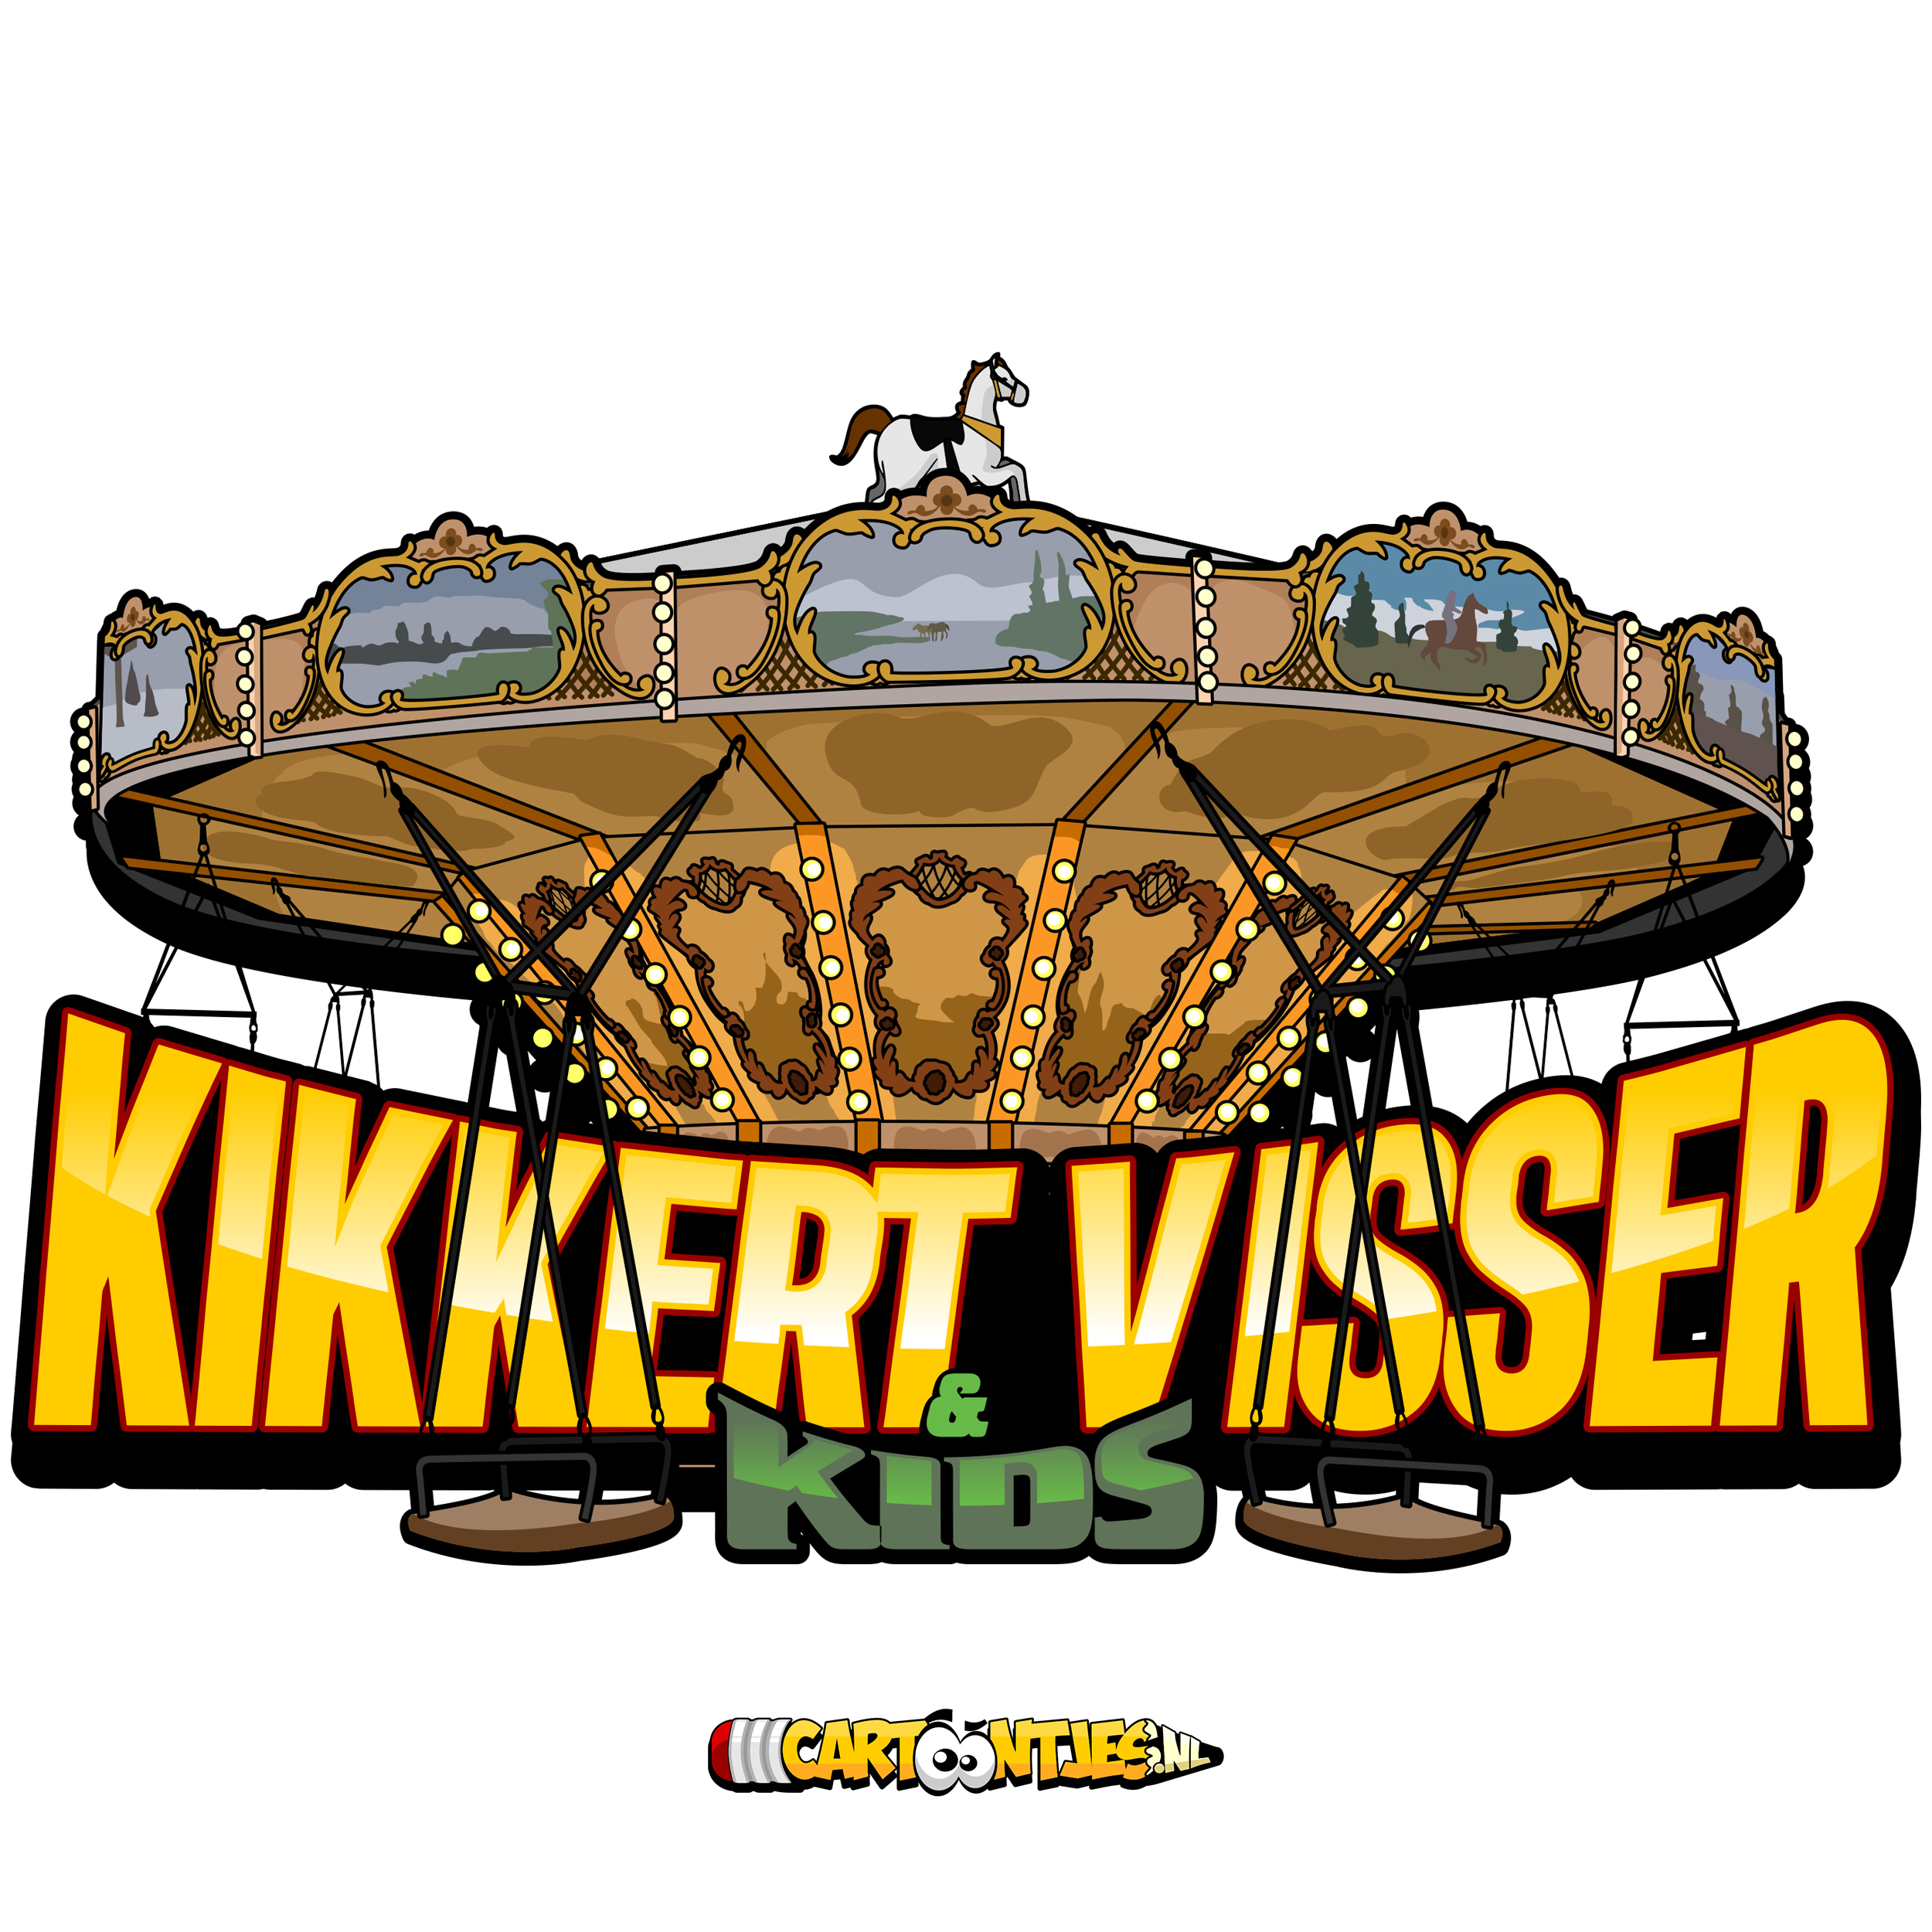 KIKKERT VISSER logo kermis draaimolen